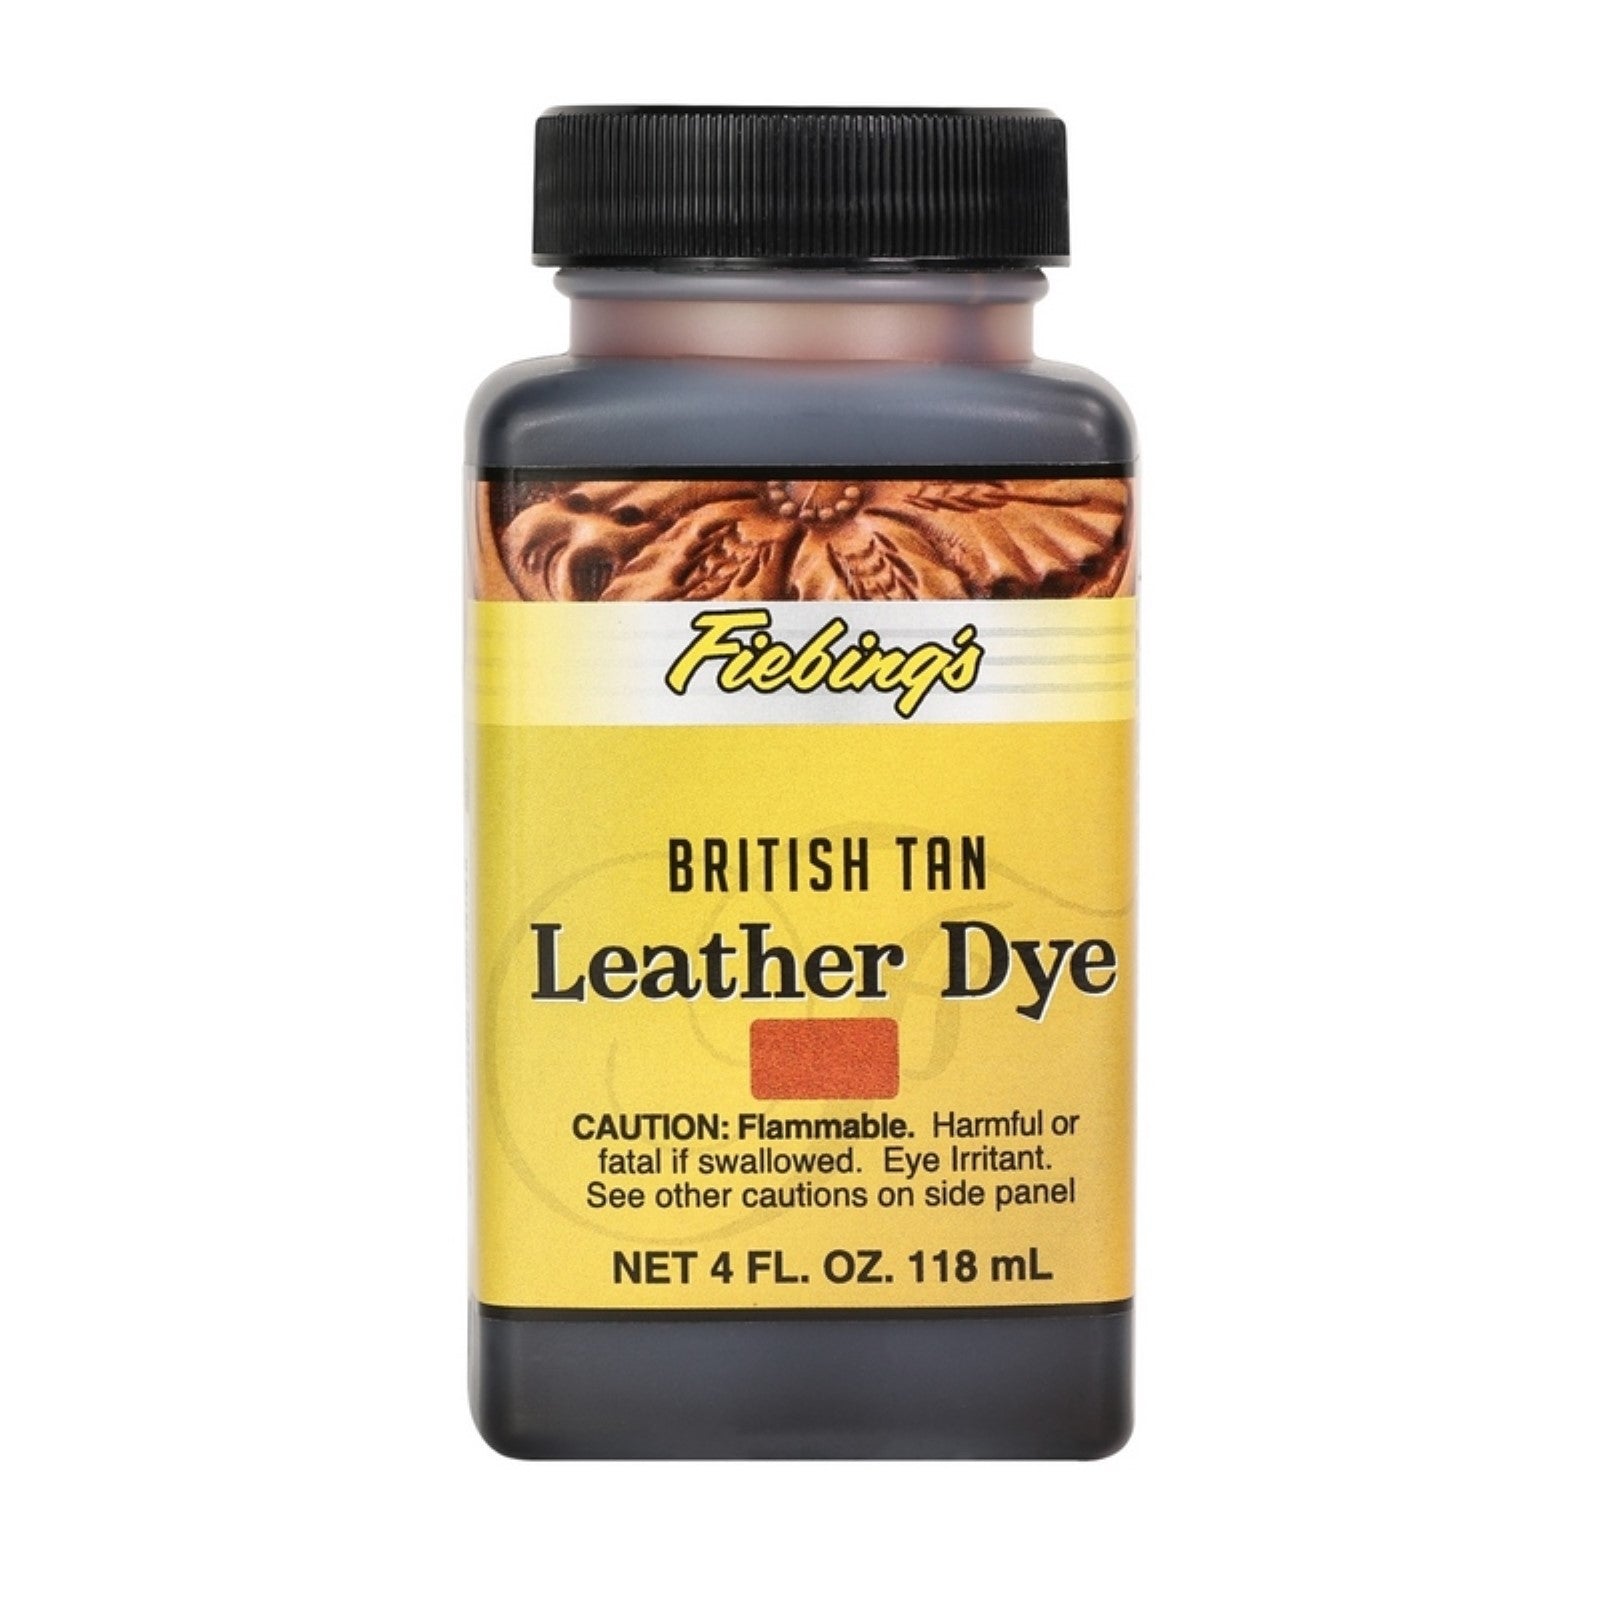 Fiebings Leather Dye, 4 oz, British Tan | The Leather Guy